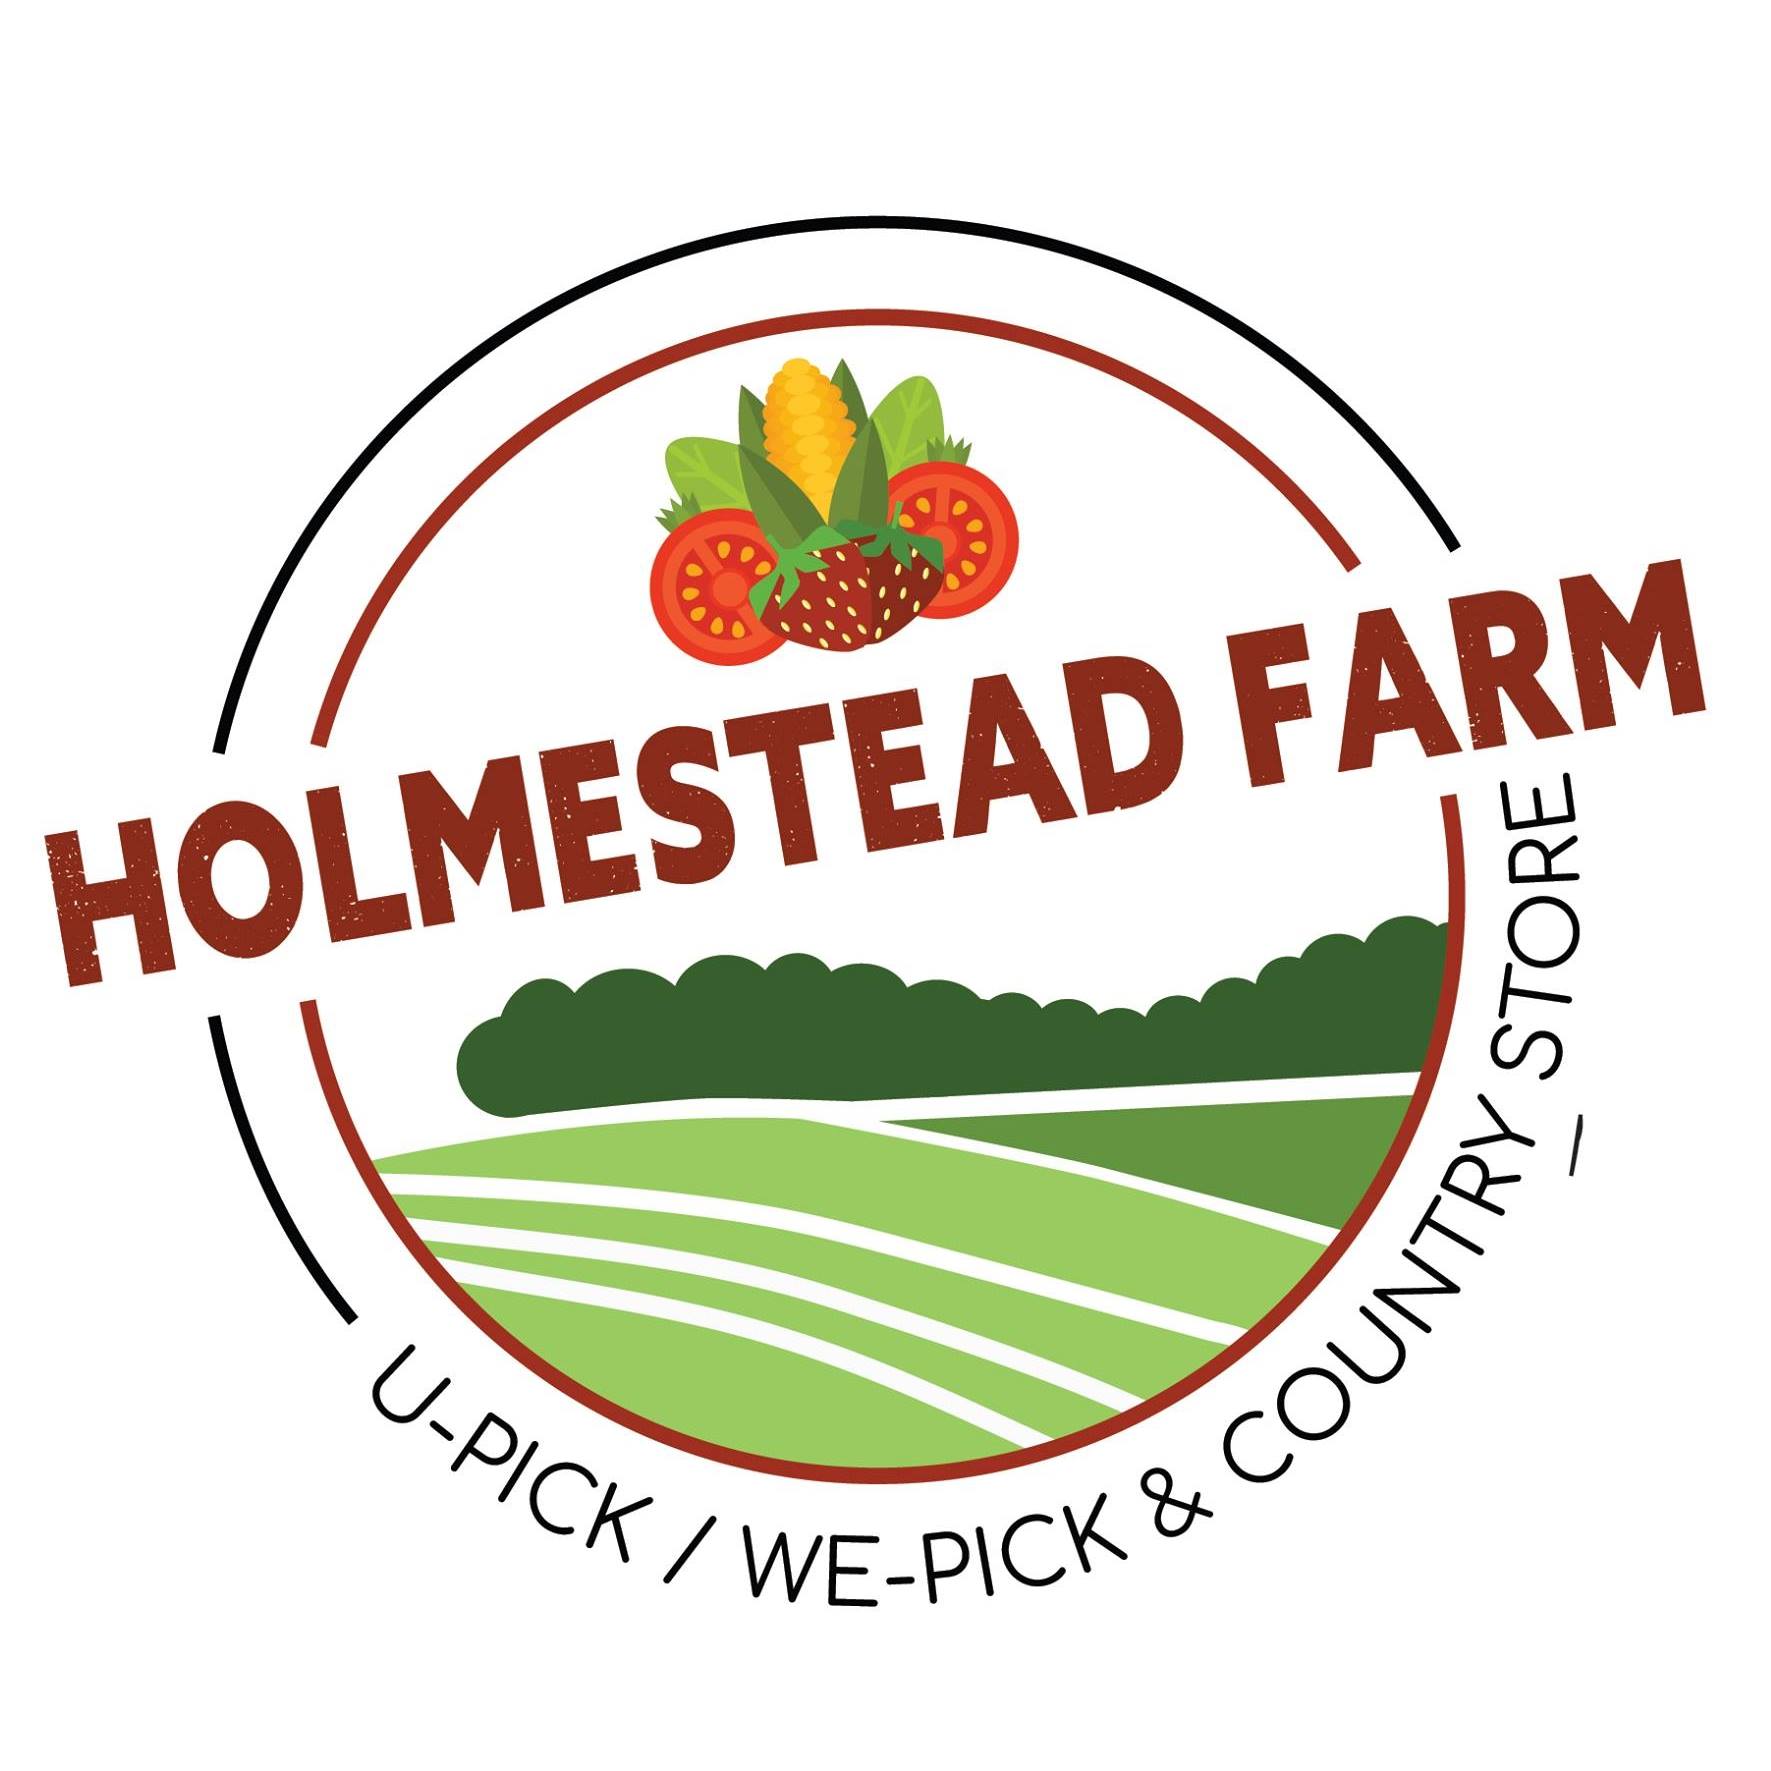 Company logo of Holmestead U-Pick We-Pick Farm Country Store & Market